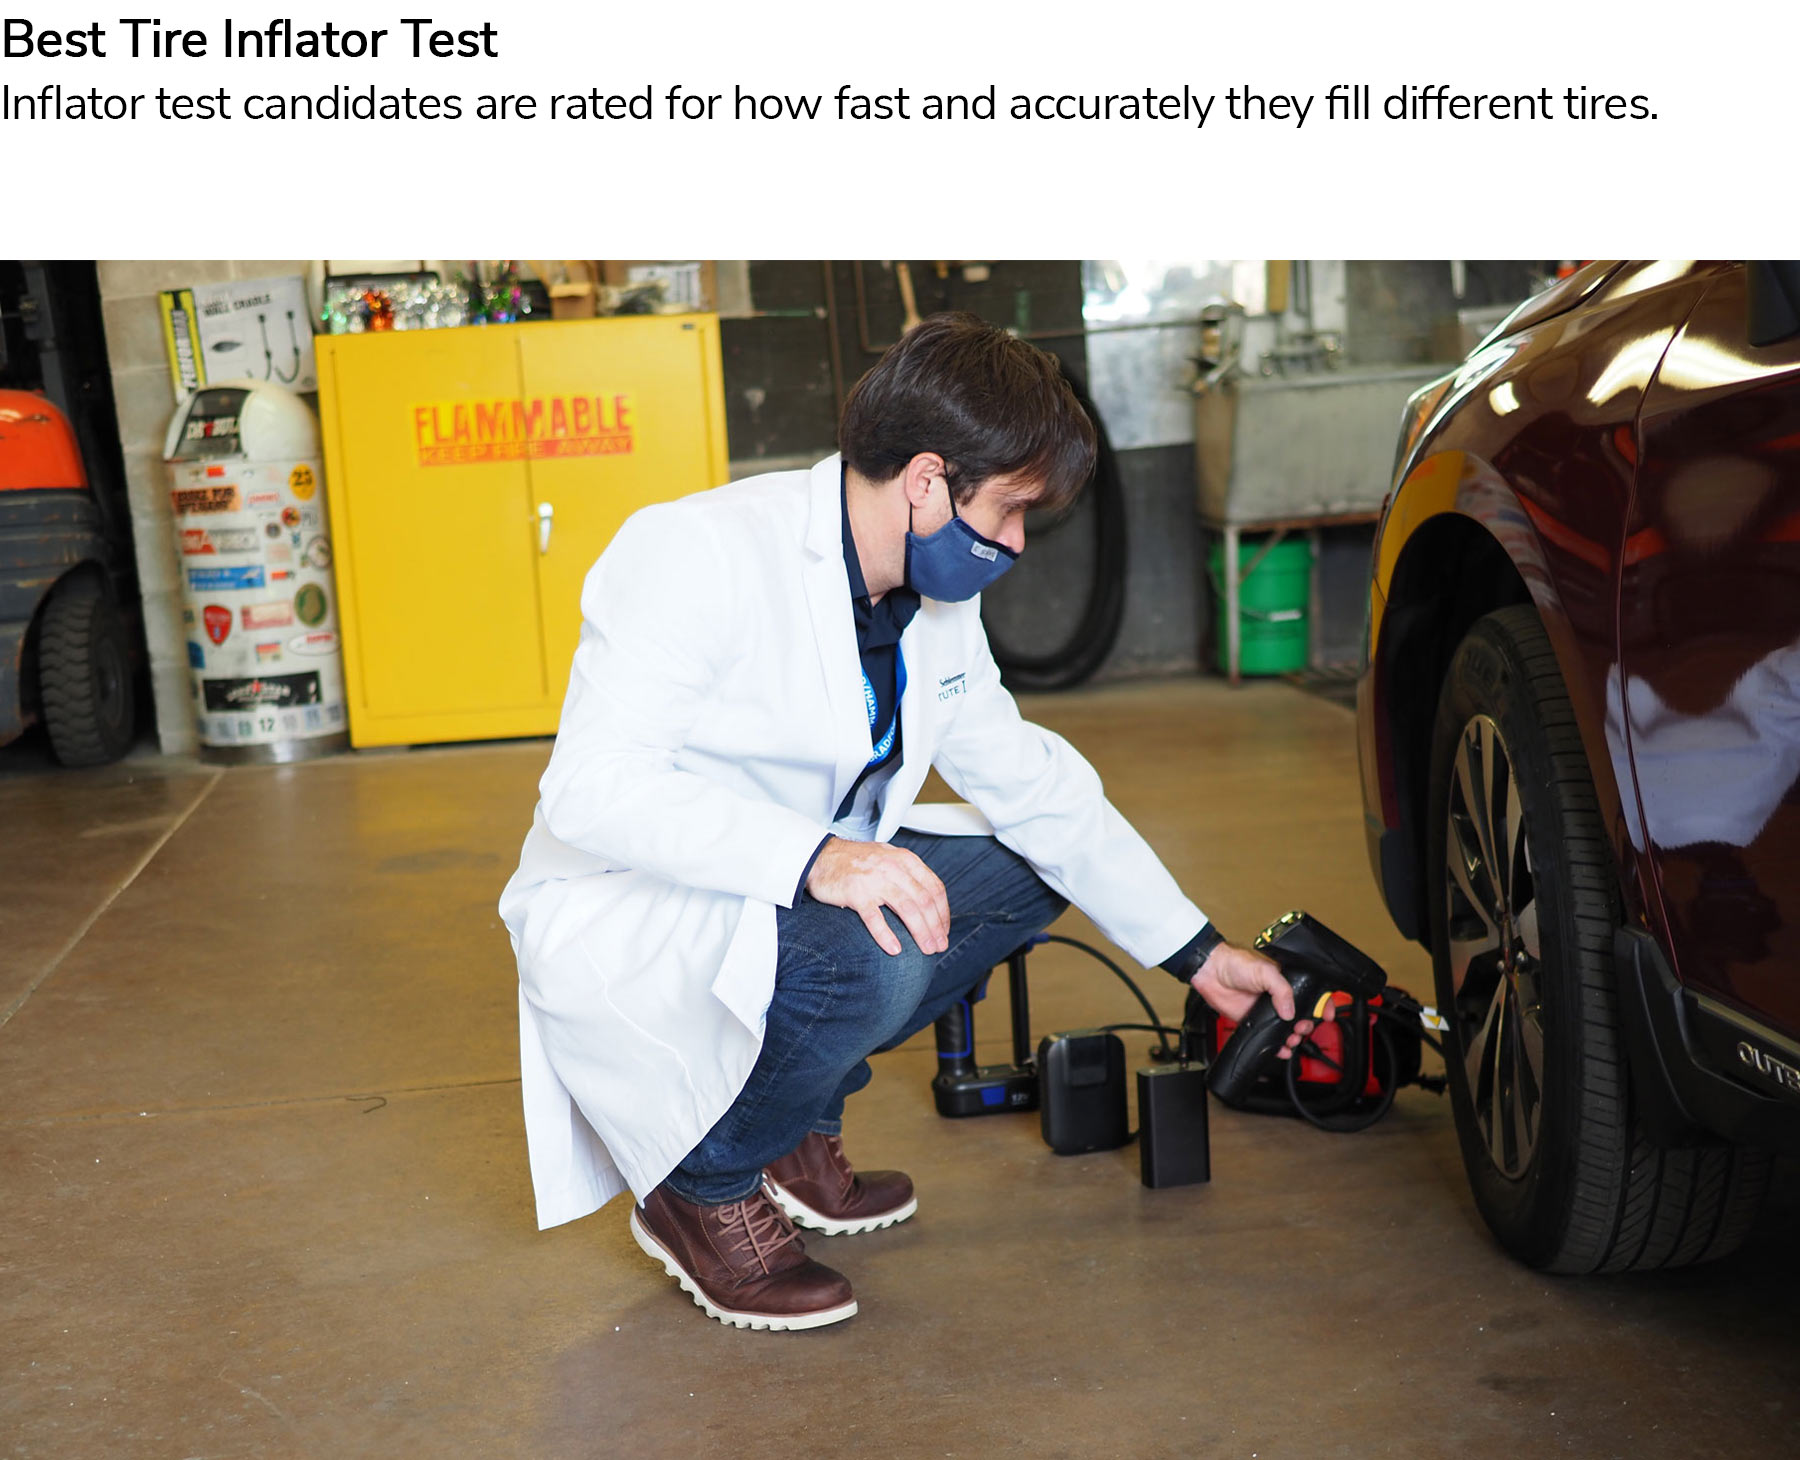 Best Tire Inflator Test